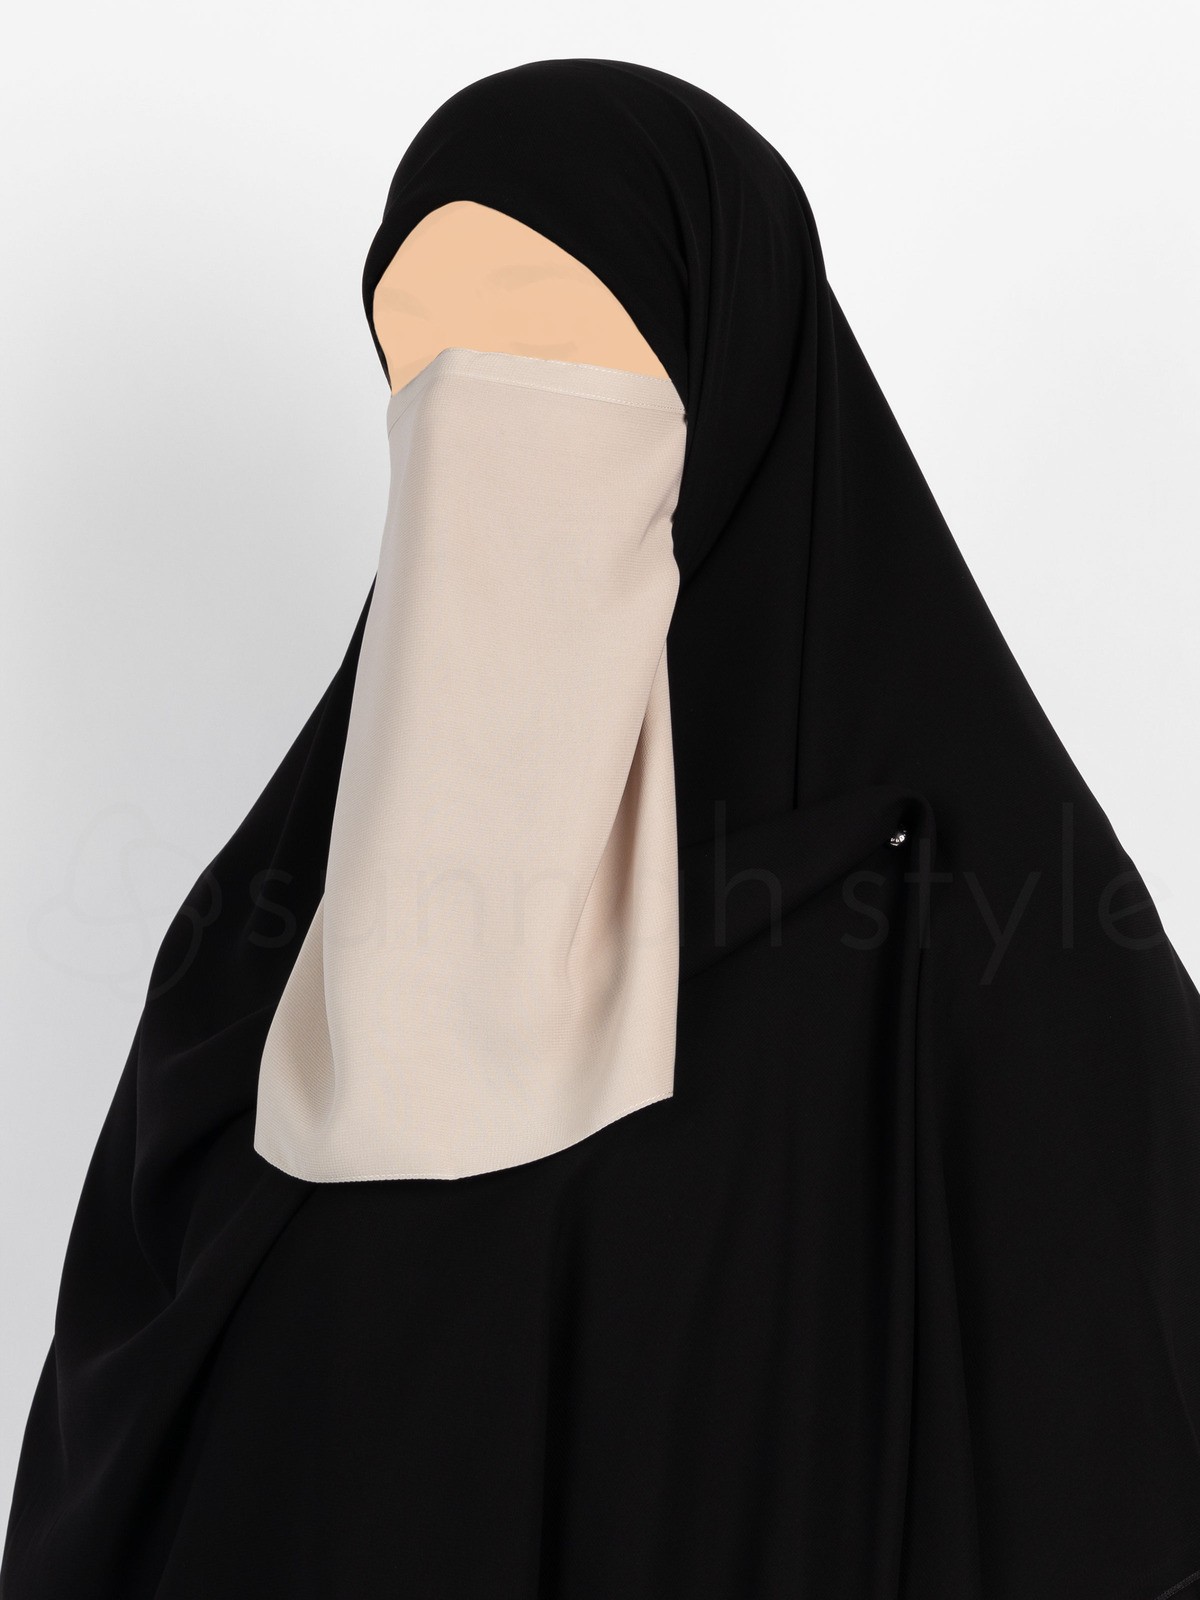 Sunnah Style - Tying Half Niqab (Sahara)